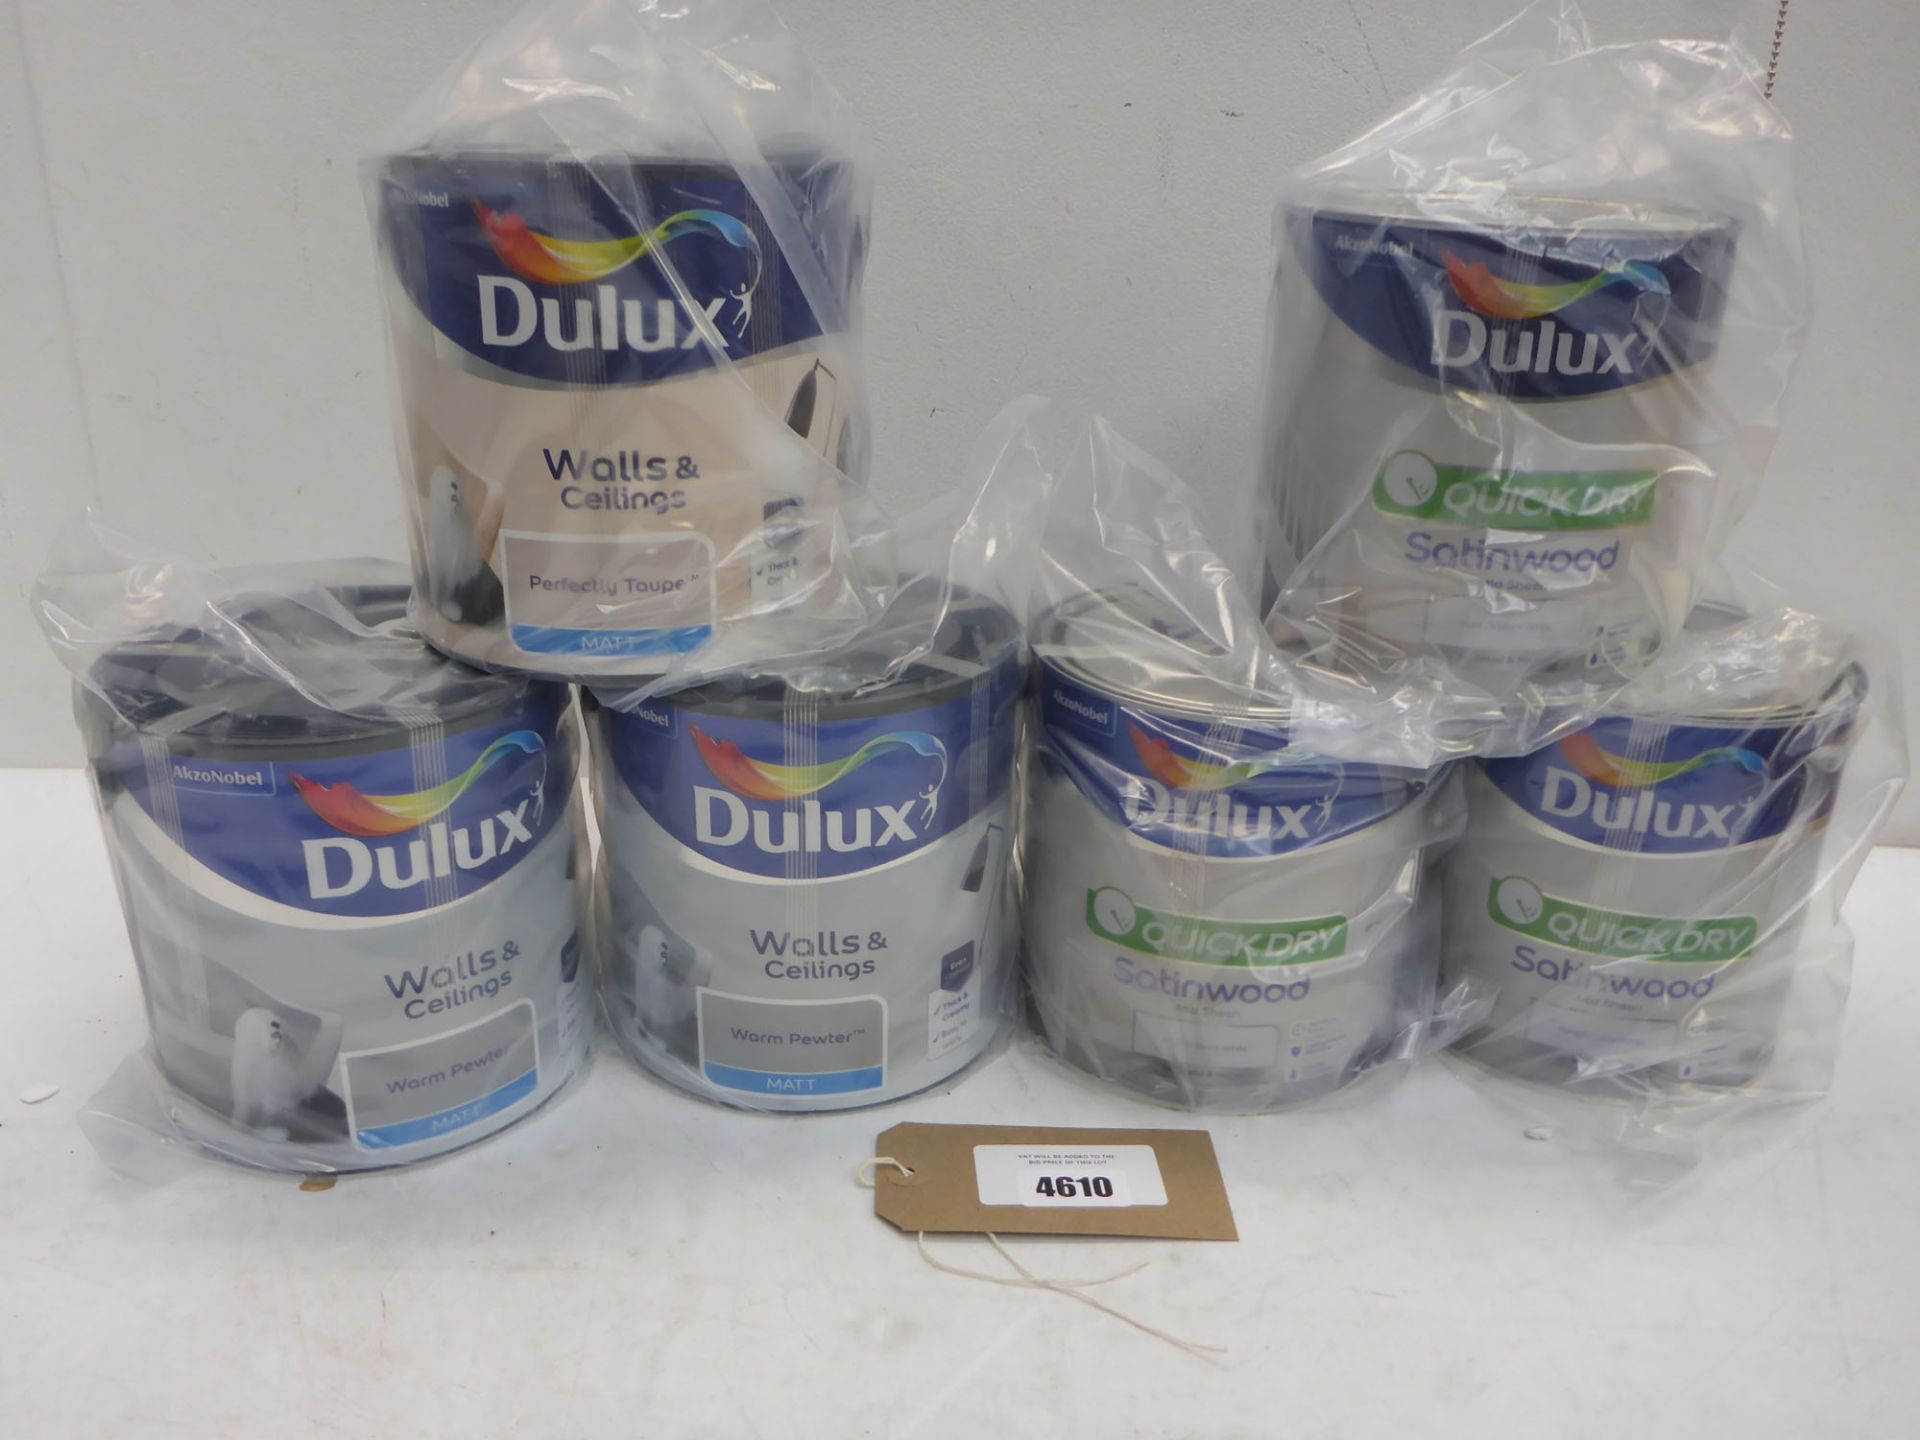 6 x 2.5L tins of Dulux Walls & Ceiling matt paints and Quickdry Satin wood paint